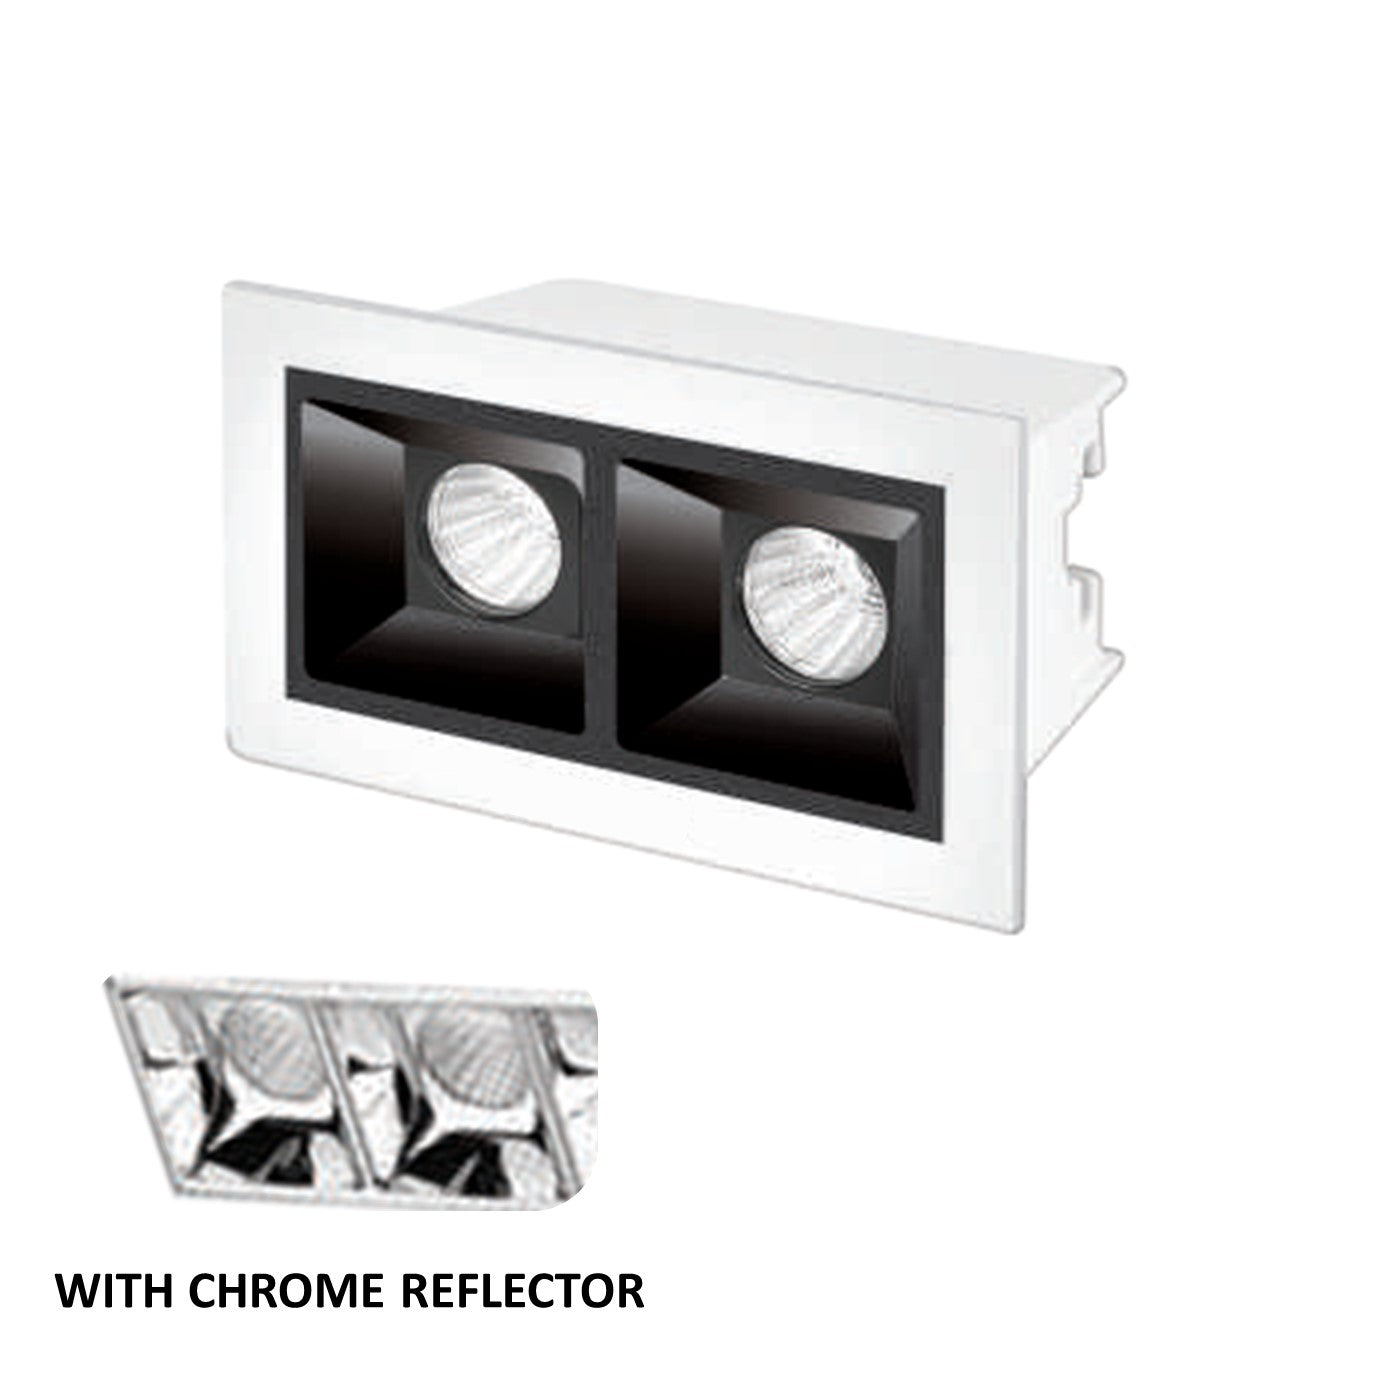 2 Led Linear Chrome Reflector Linea 30 Linear Laser Spot Light 5w ALLN5S